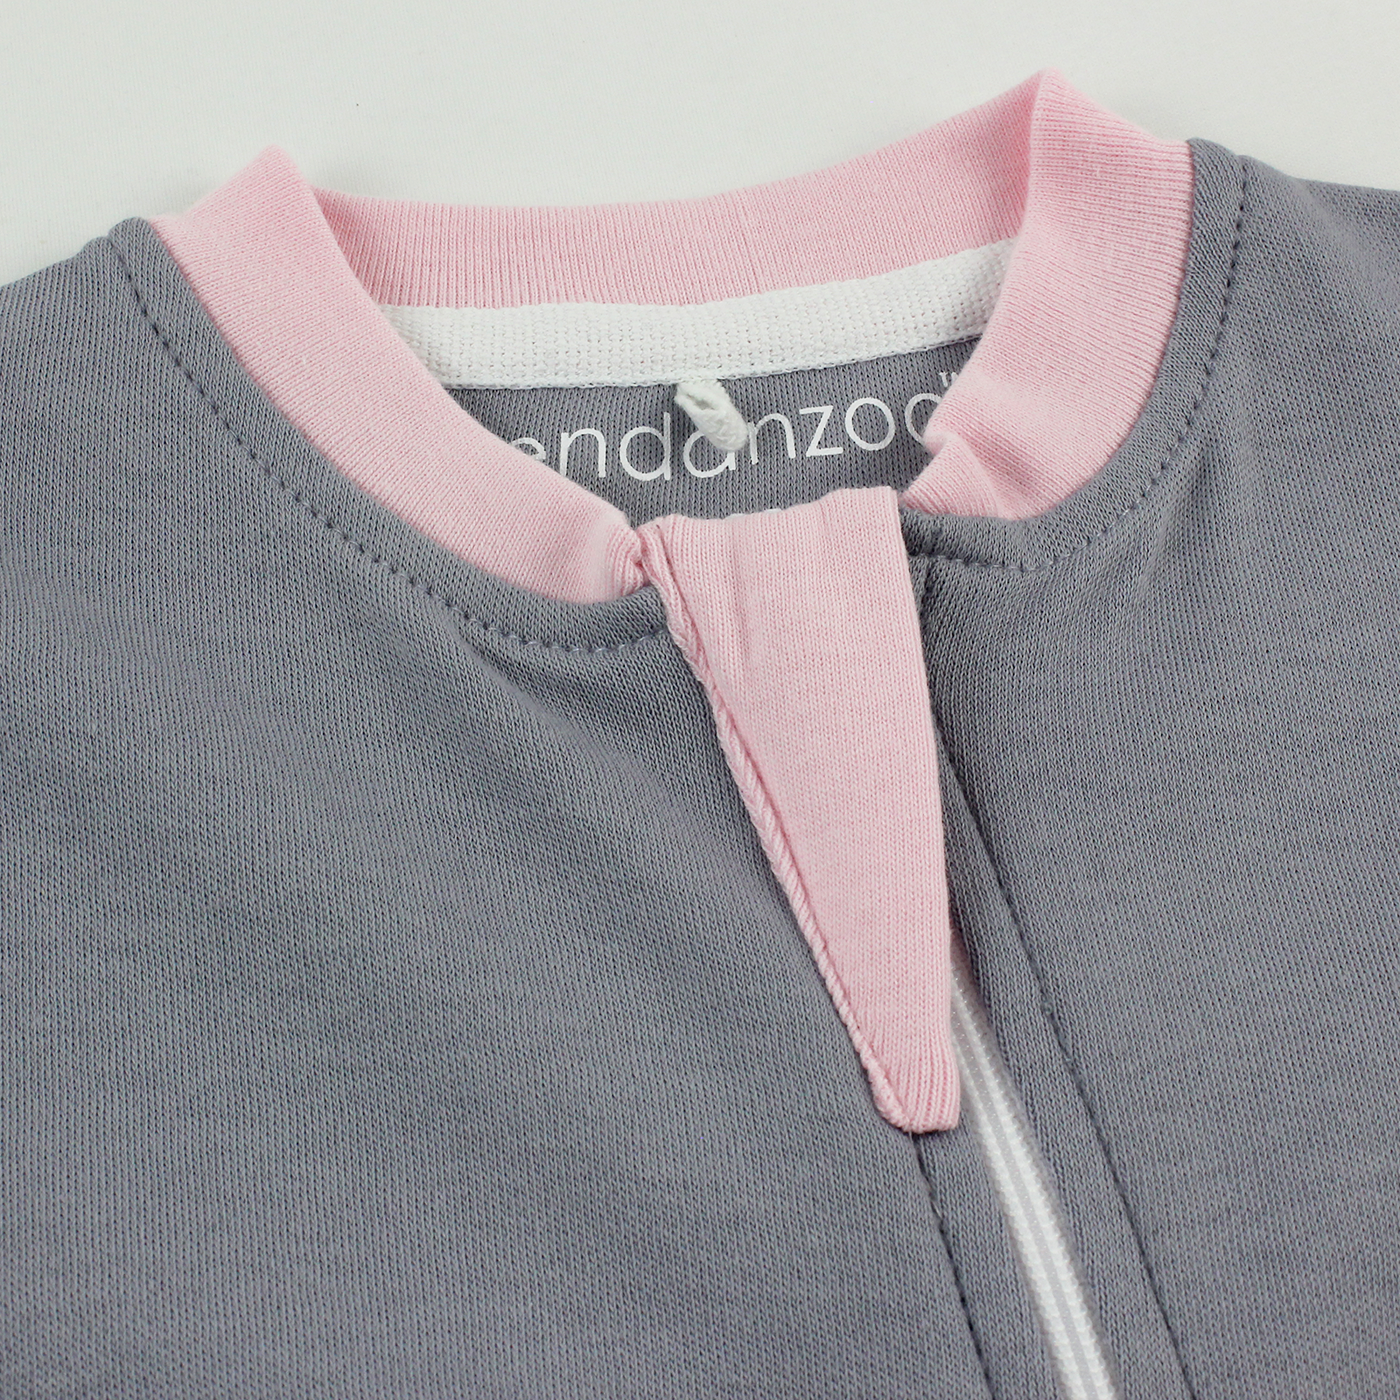 Endanzoo Organic Long Sleeve Double Zippered Romper - Grey w/ Pink